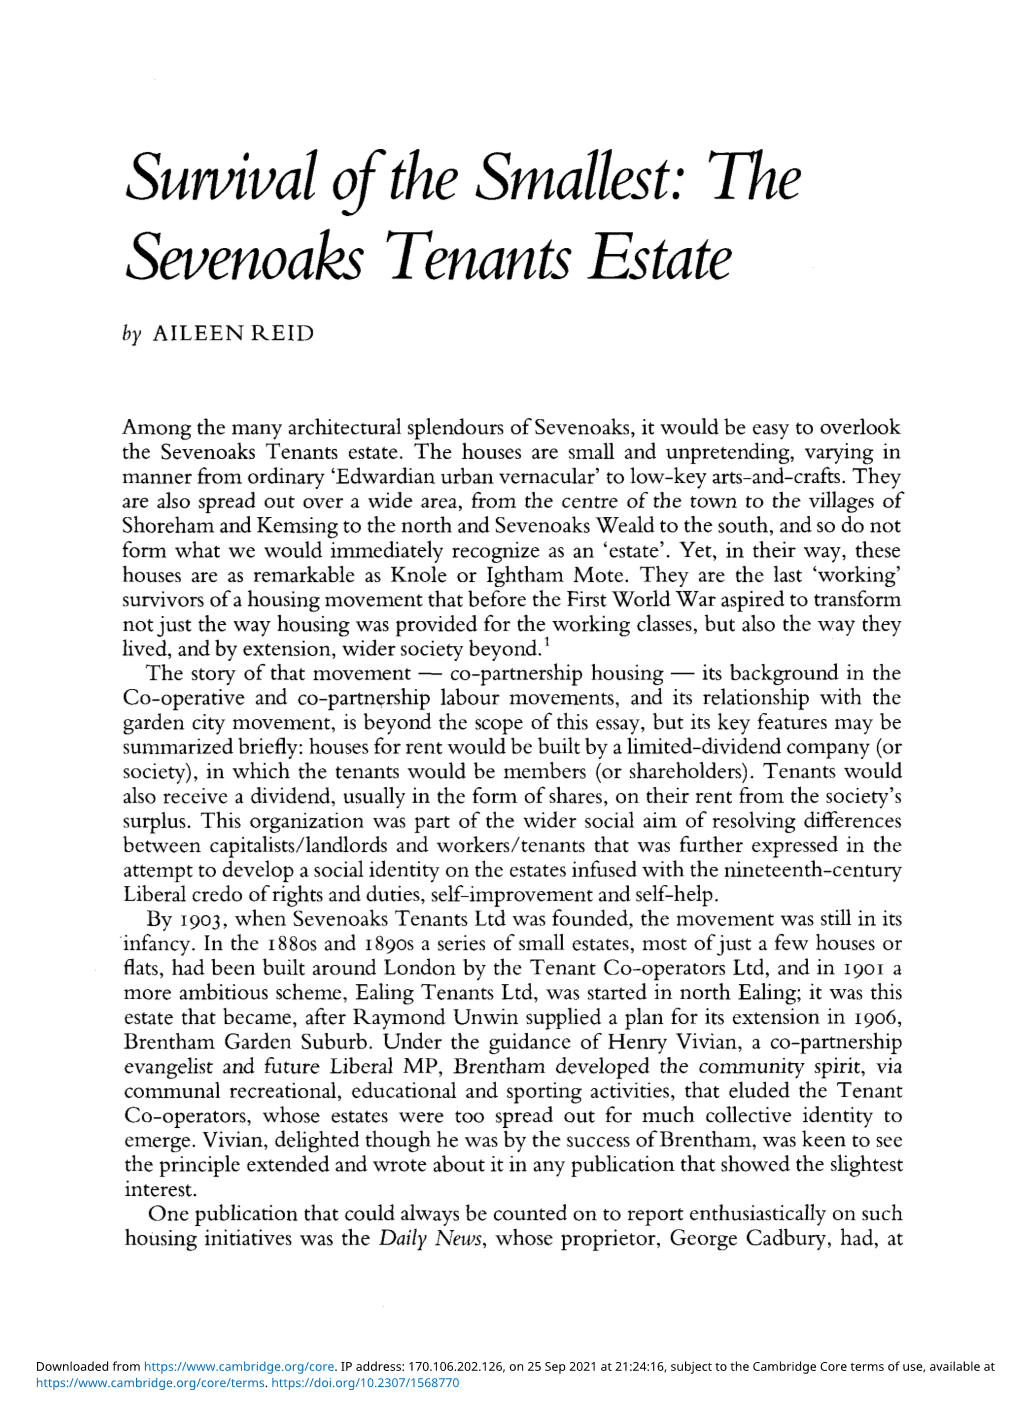 The Sevenoaks Tenants Estate